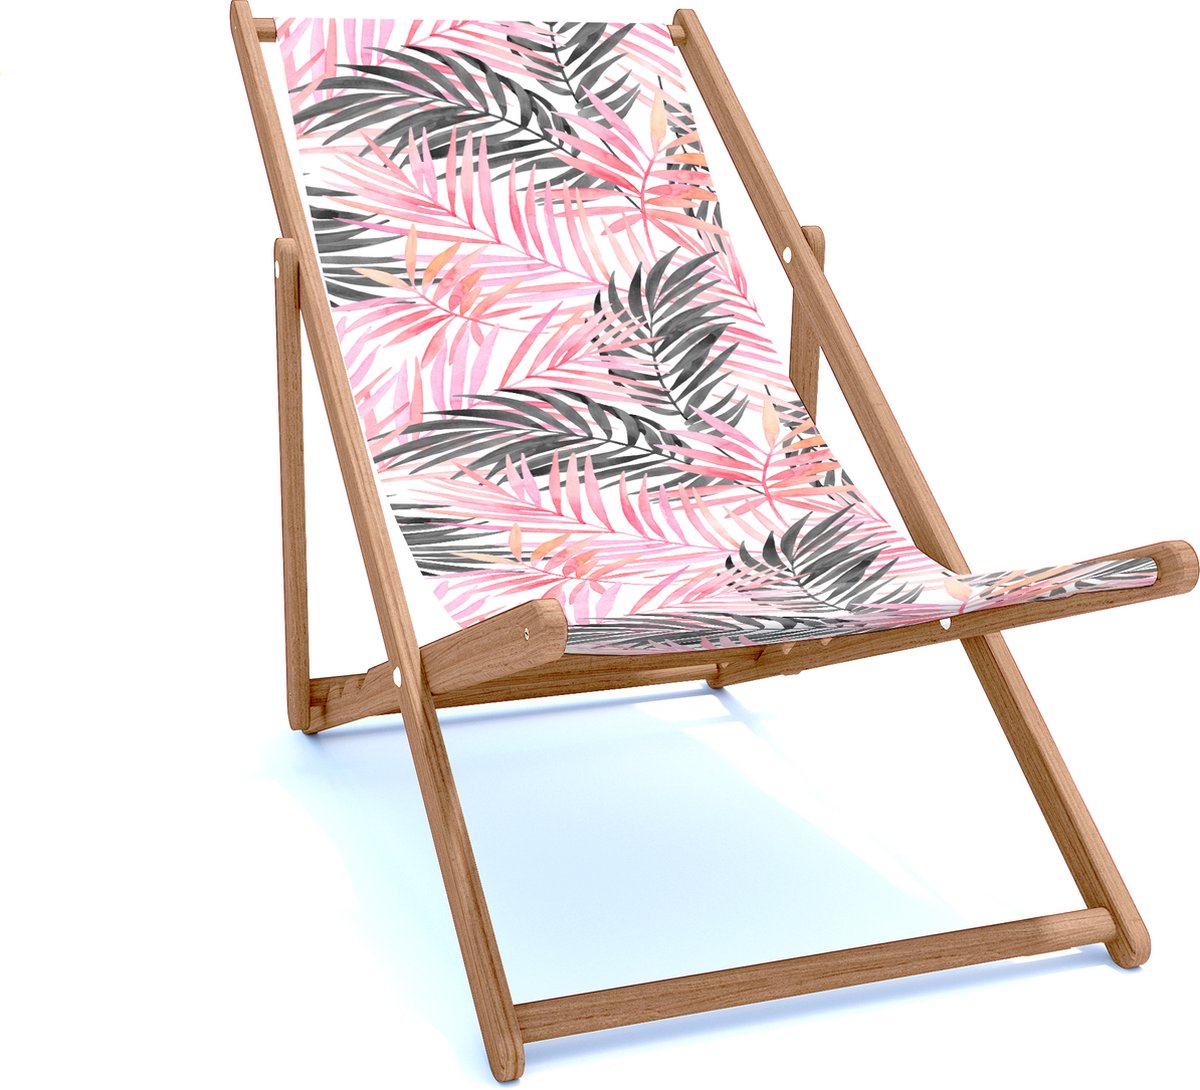 Holtaz Strandstoel Hout Inklapbaar Comfortabele Zonnebed Ligbed met verstelbare Lighoogte houten frame met stoffen Bladeren